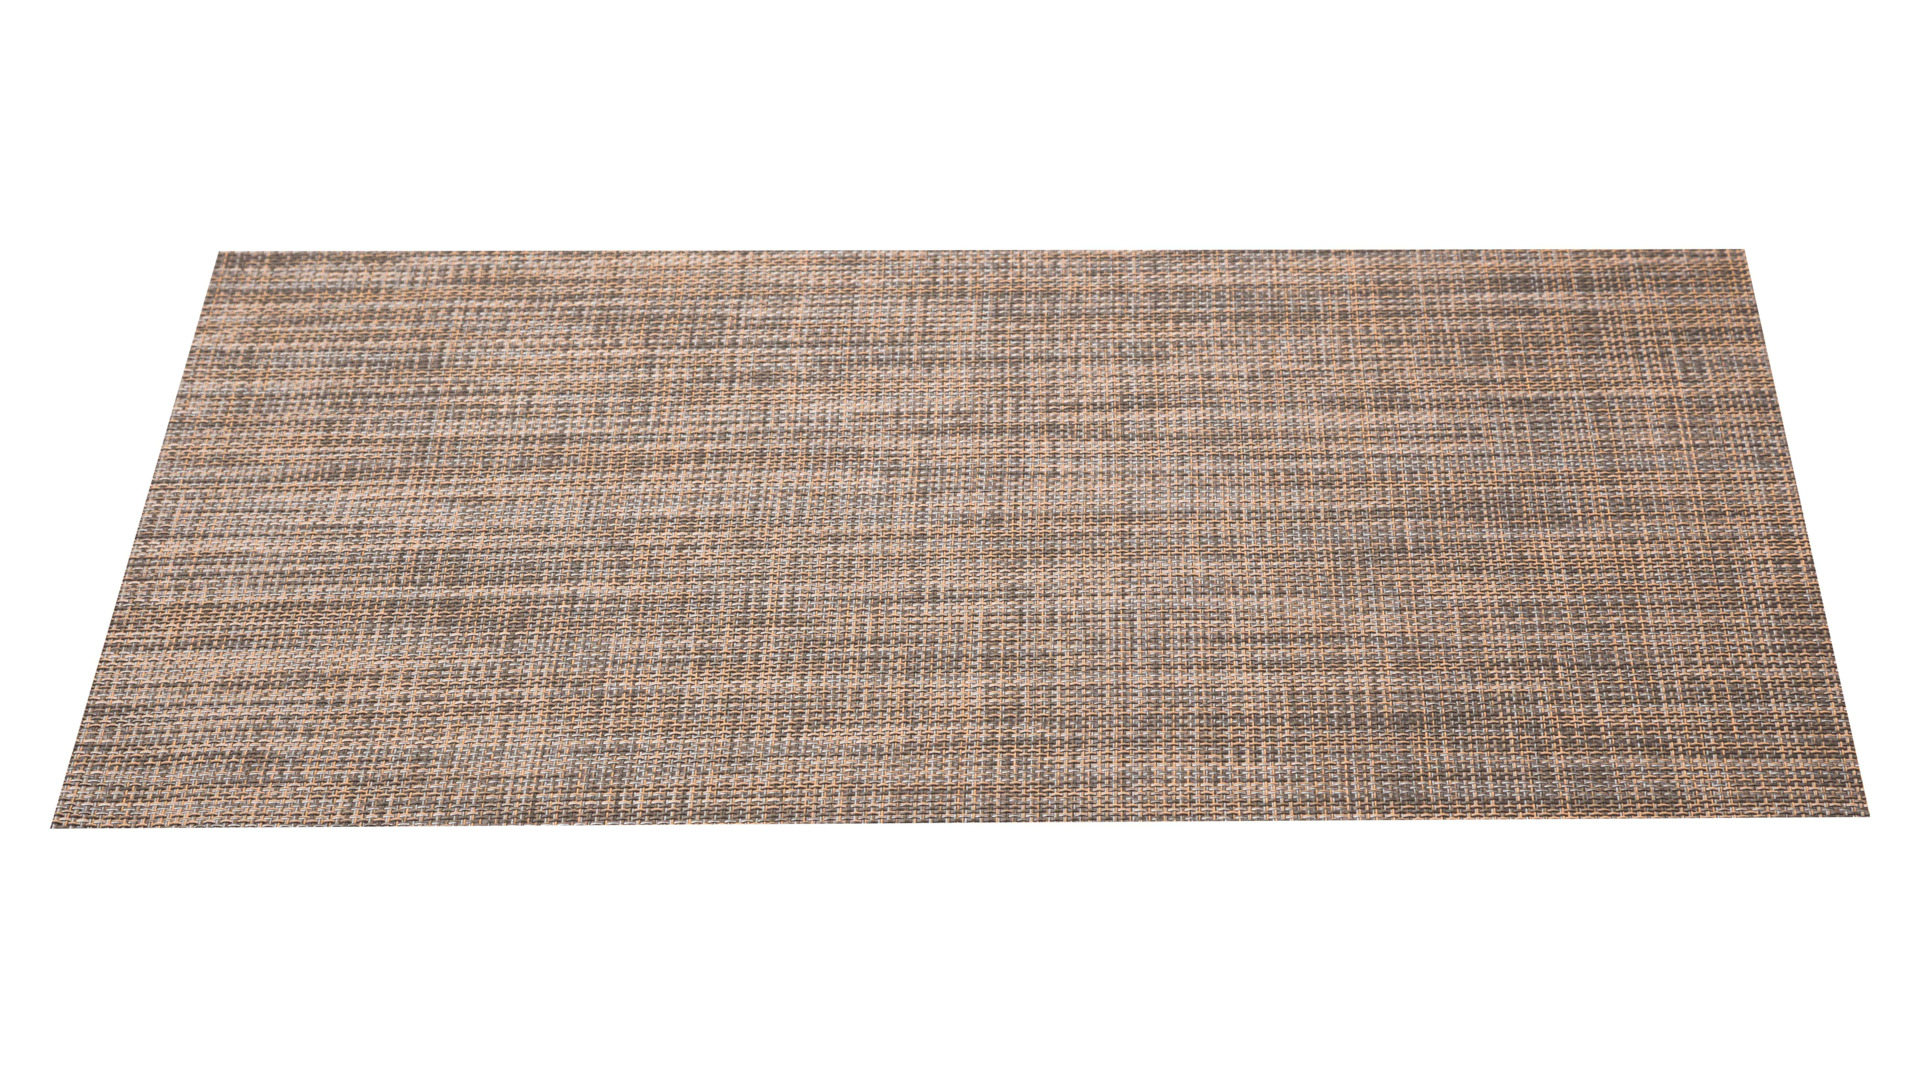 Салфетка подстановочная прямоугольная WO HOME OMBRE 33х48 см, двусторонняя, коричневая